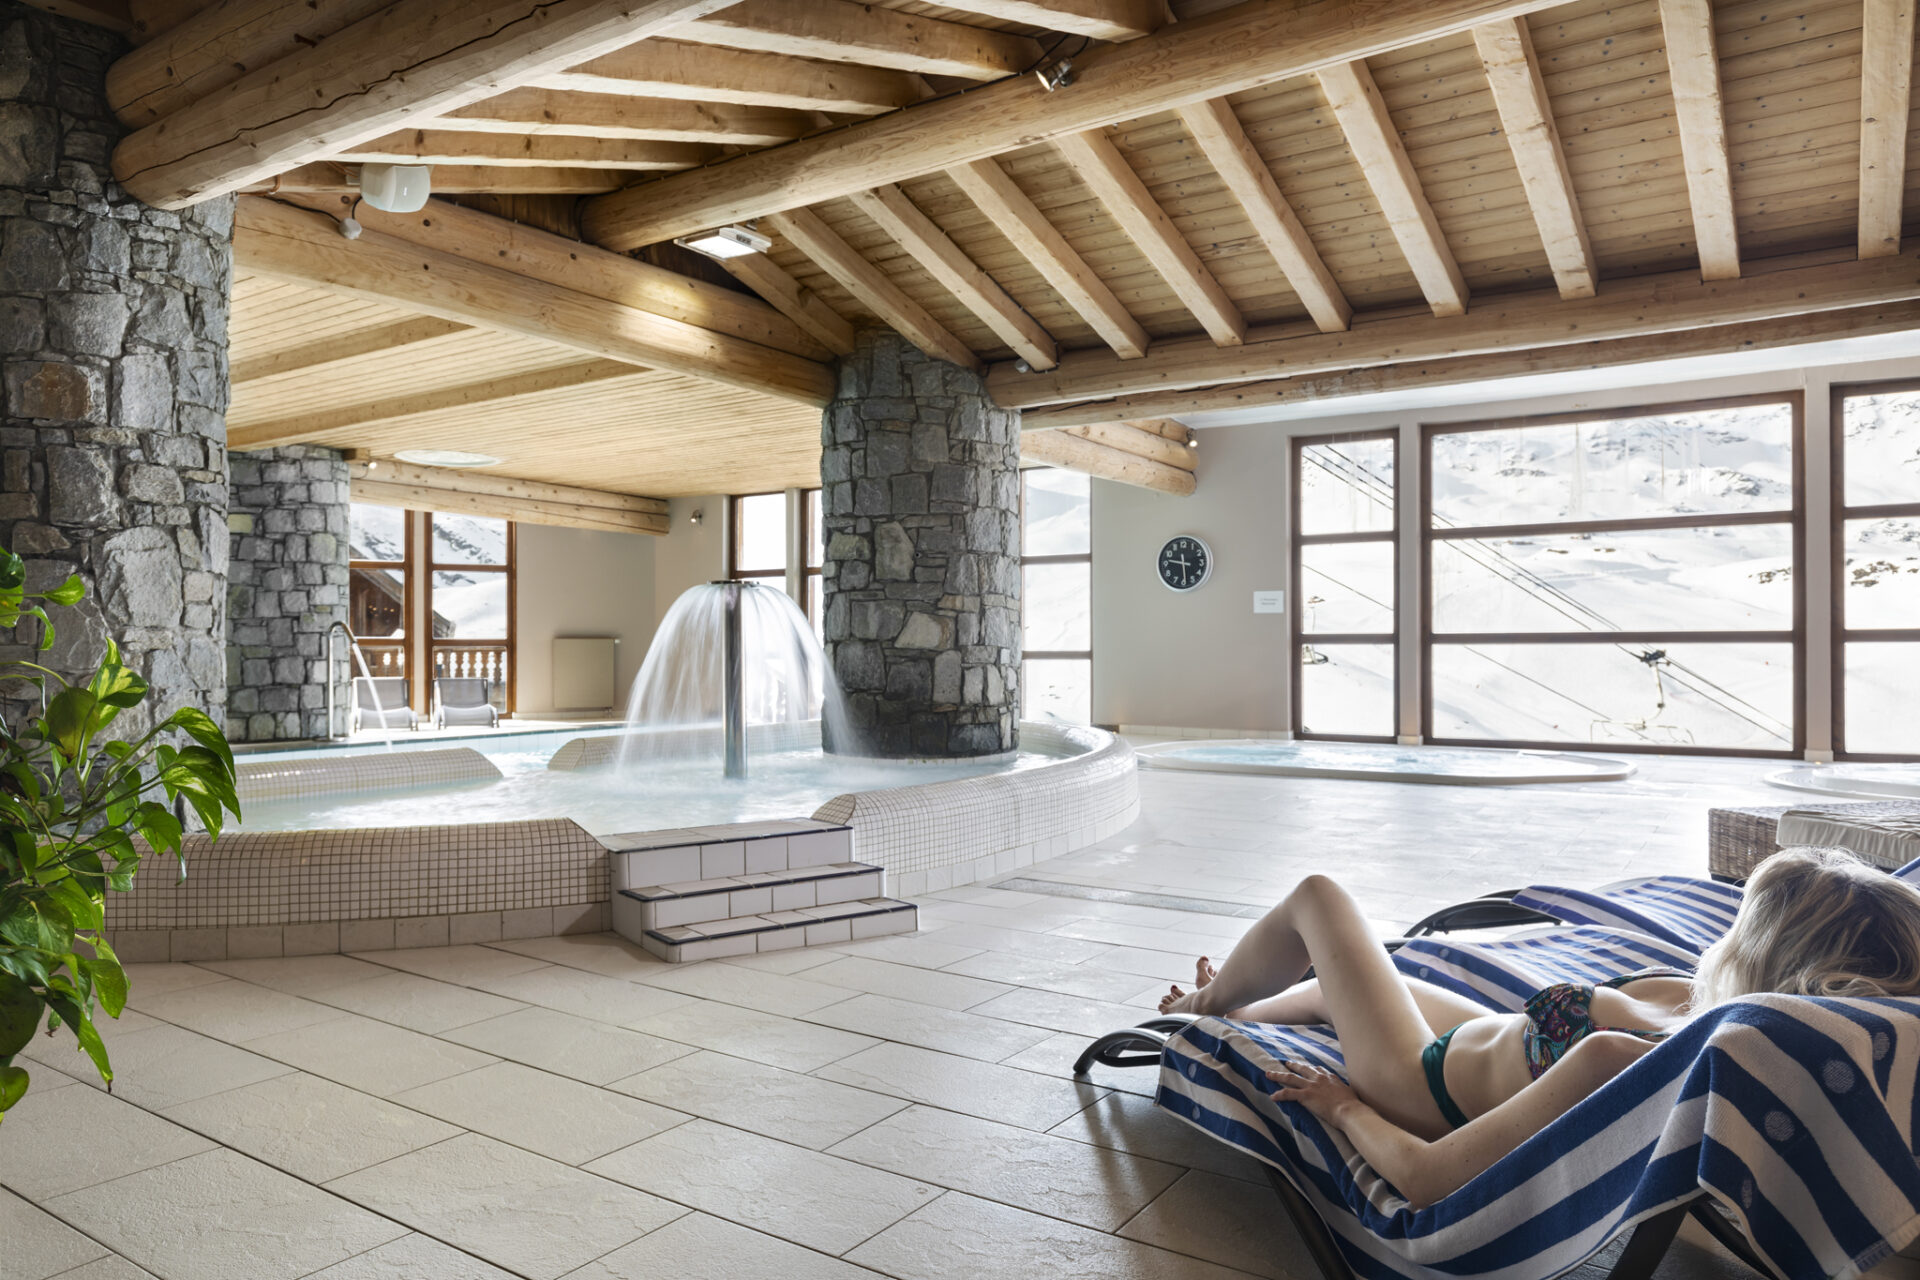 The spa area at Les Balcons de Val Thorens